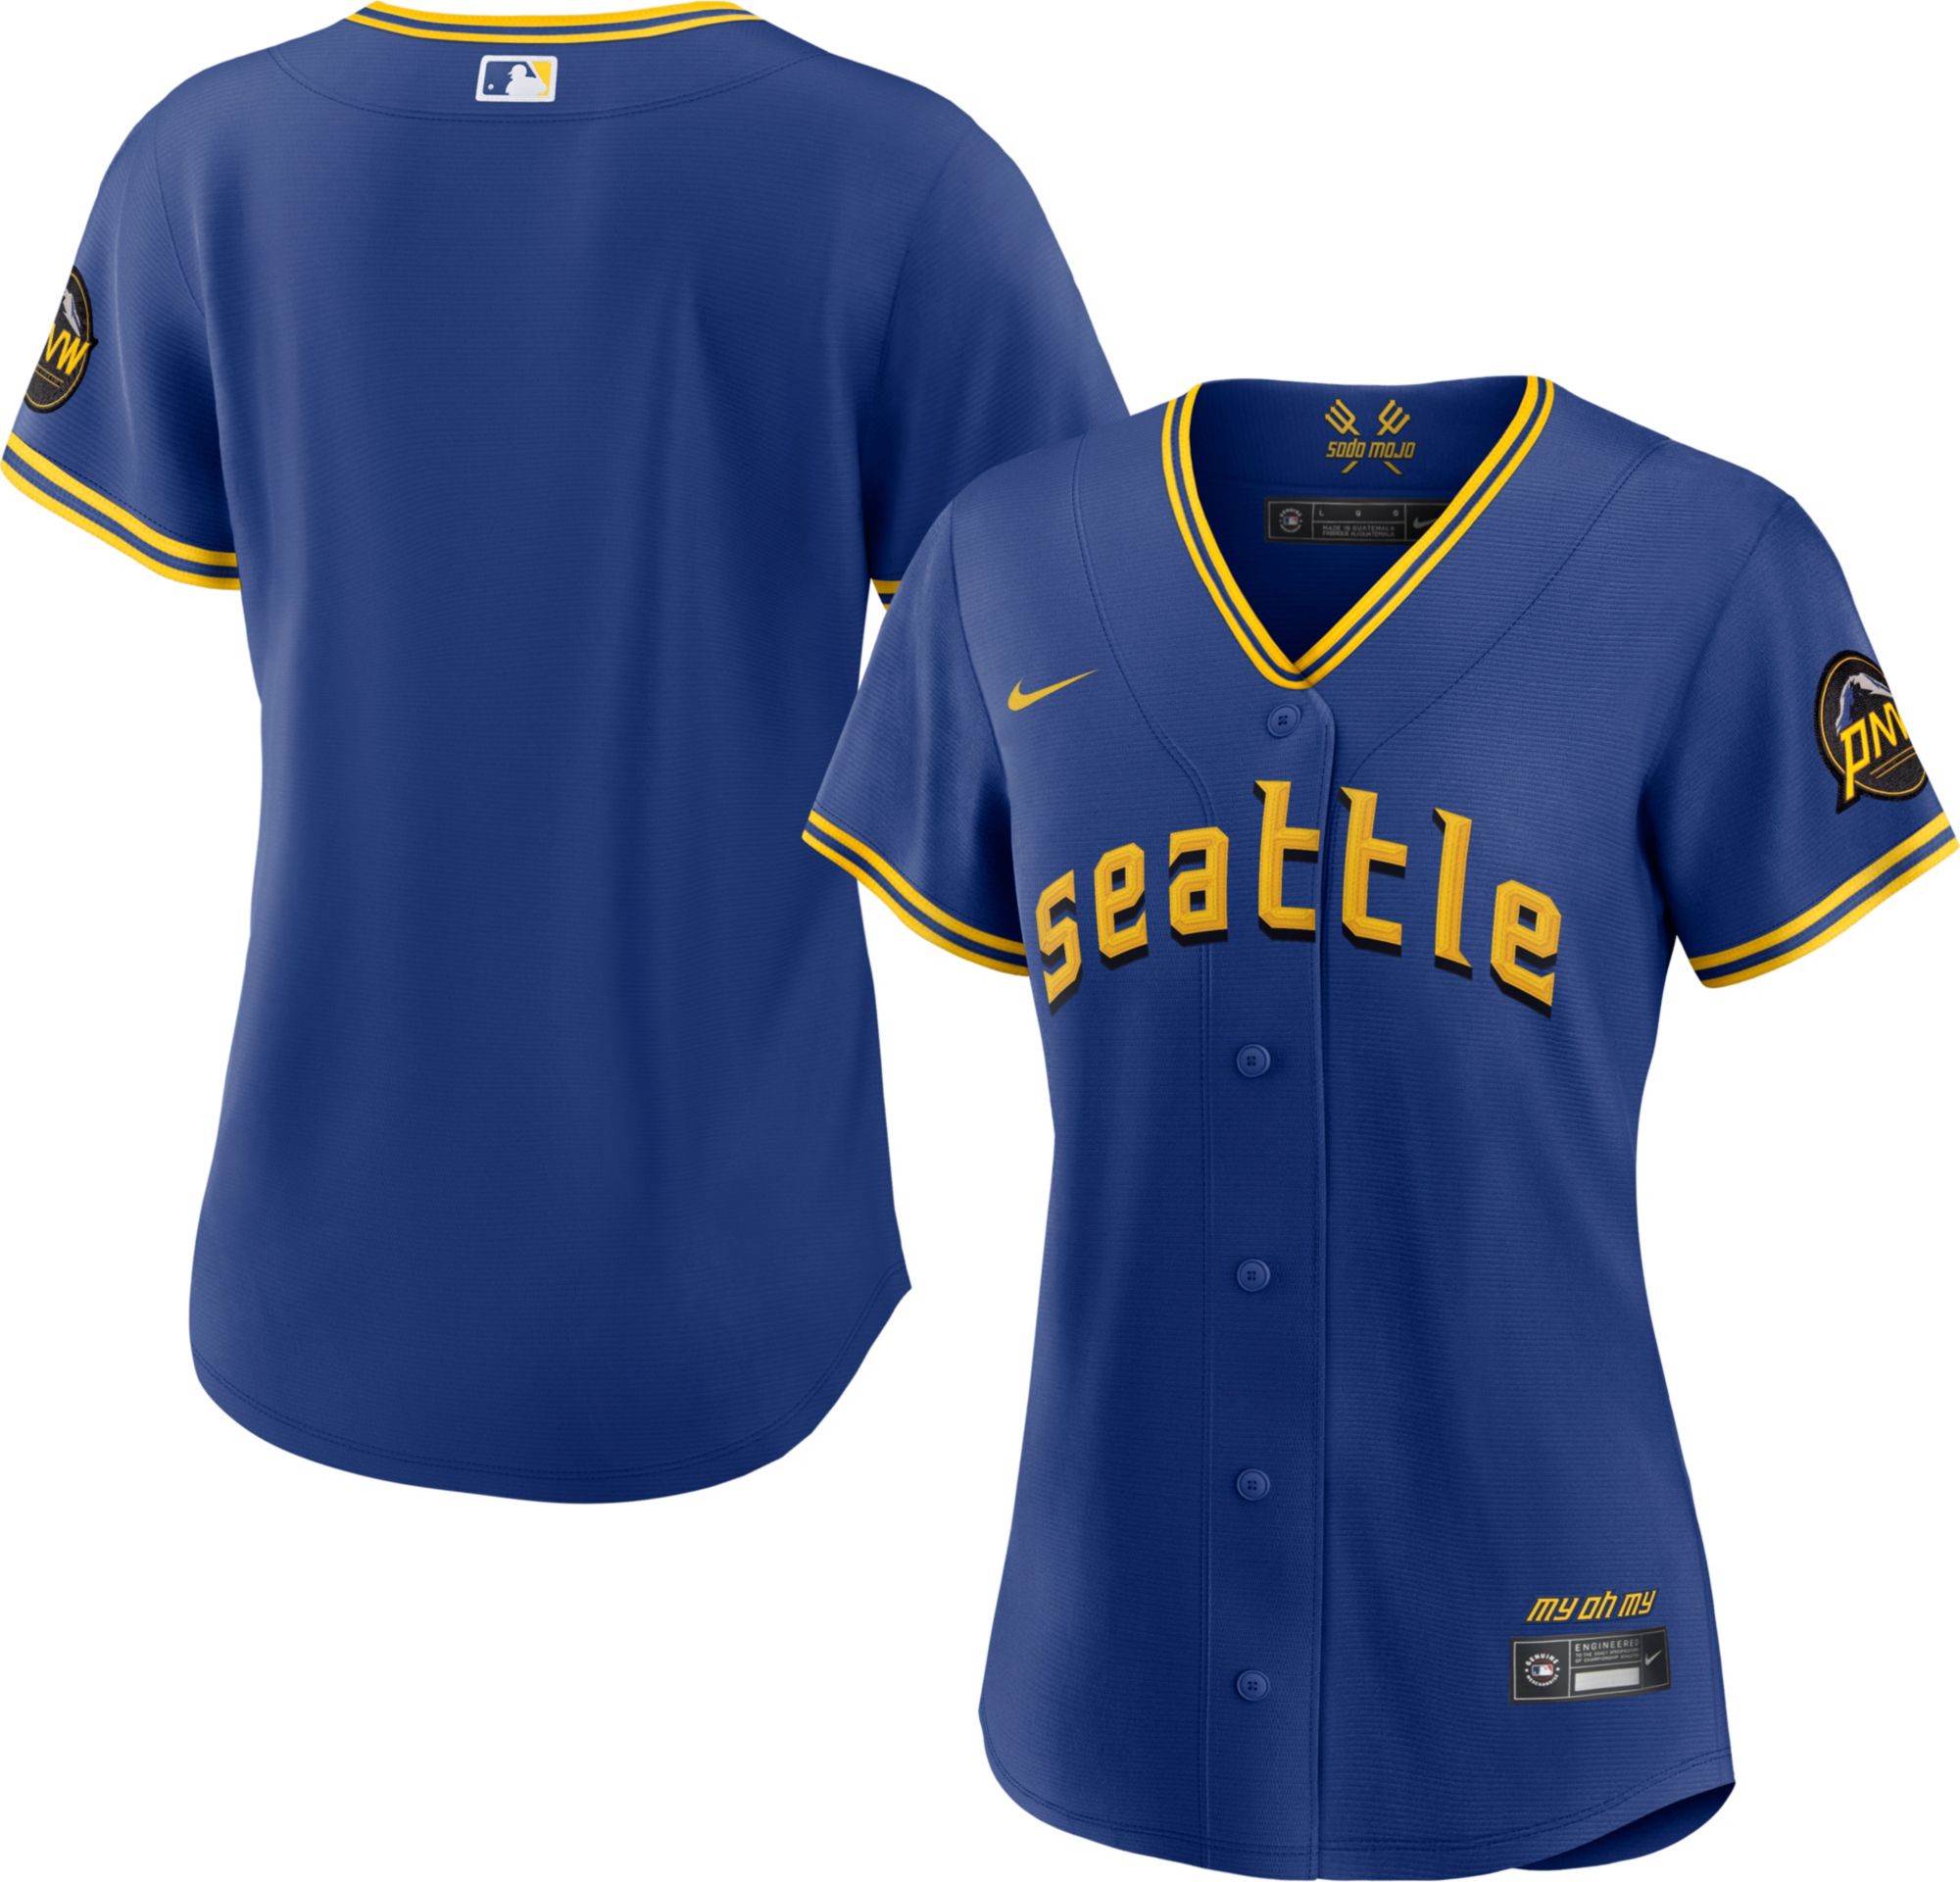 Seattle Mariners MLB Baseball Jeffy Dabbing Sports T Shirt For Men And Women